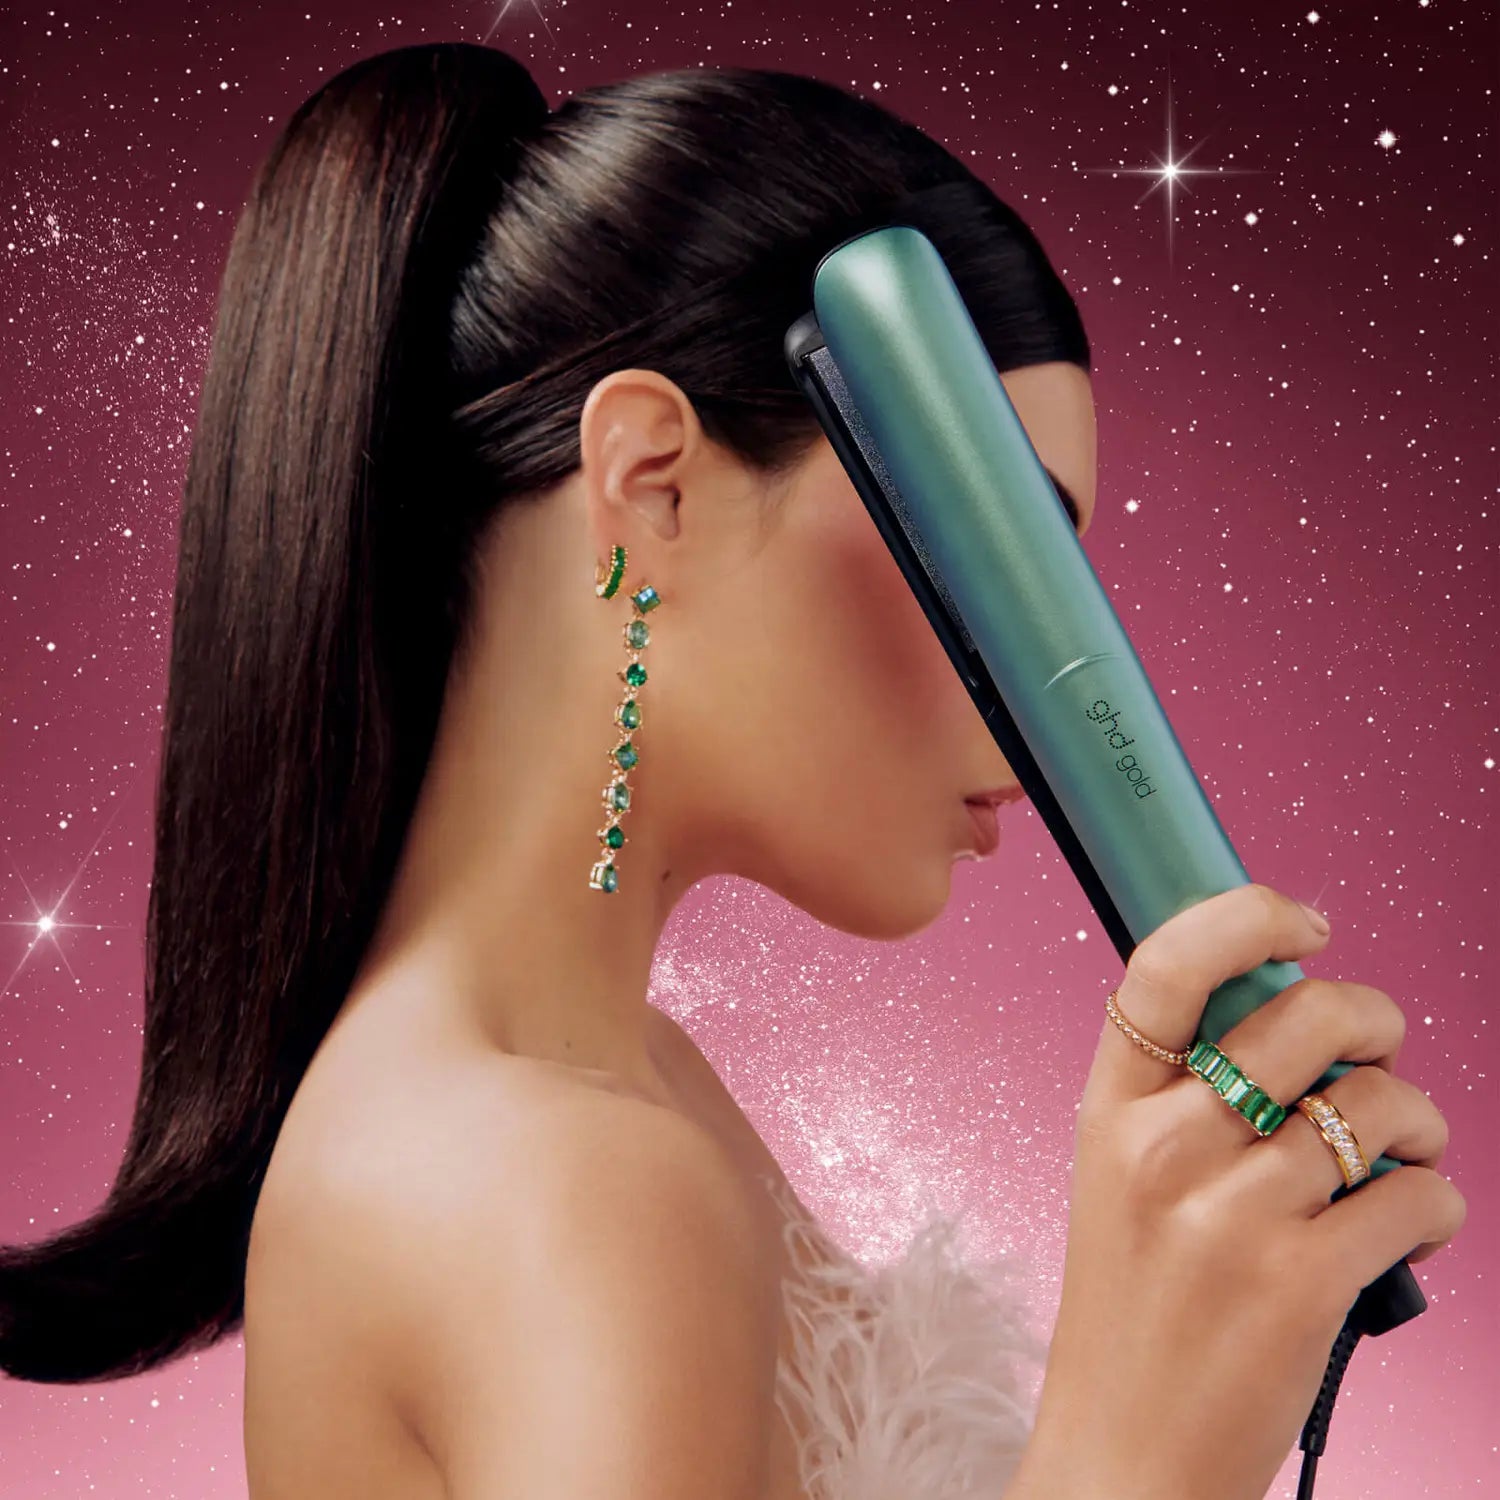 Model holding ghd Gold Hair Straightener In Alluring Jade